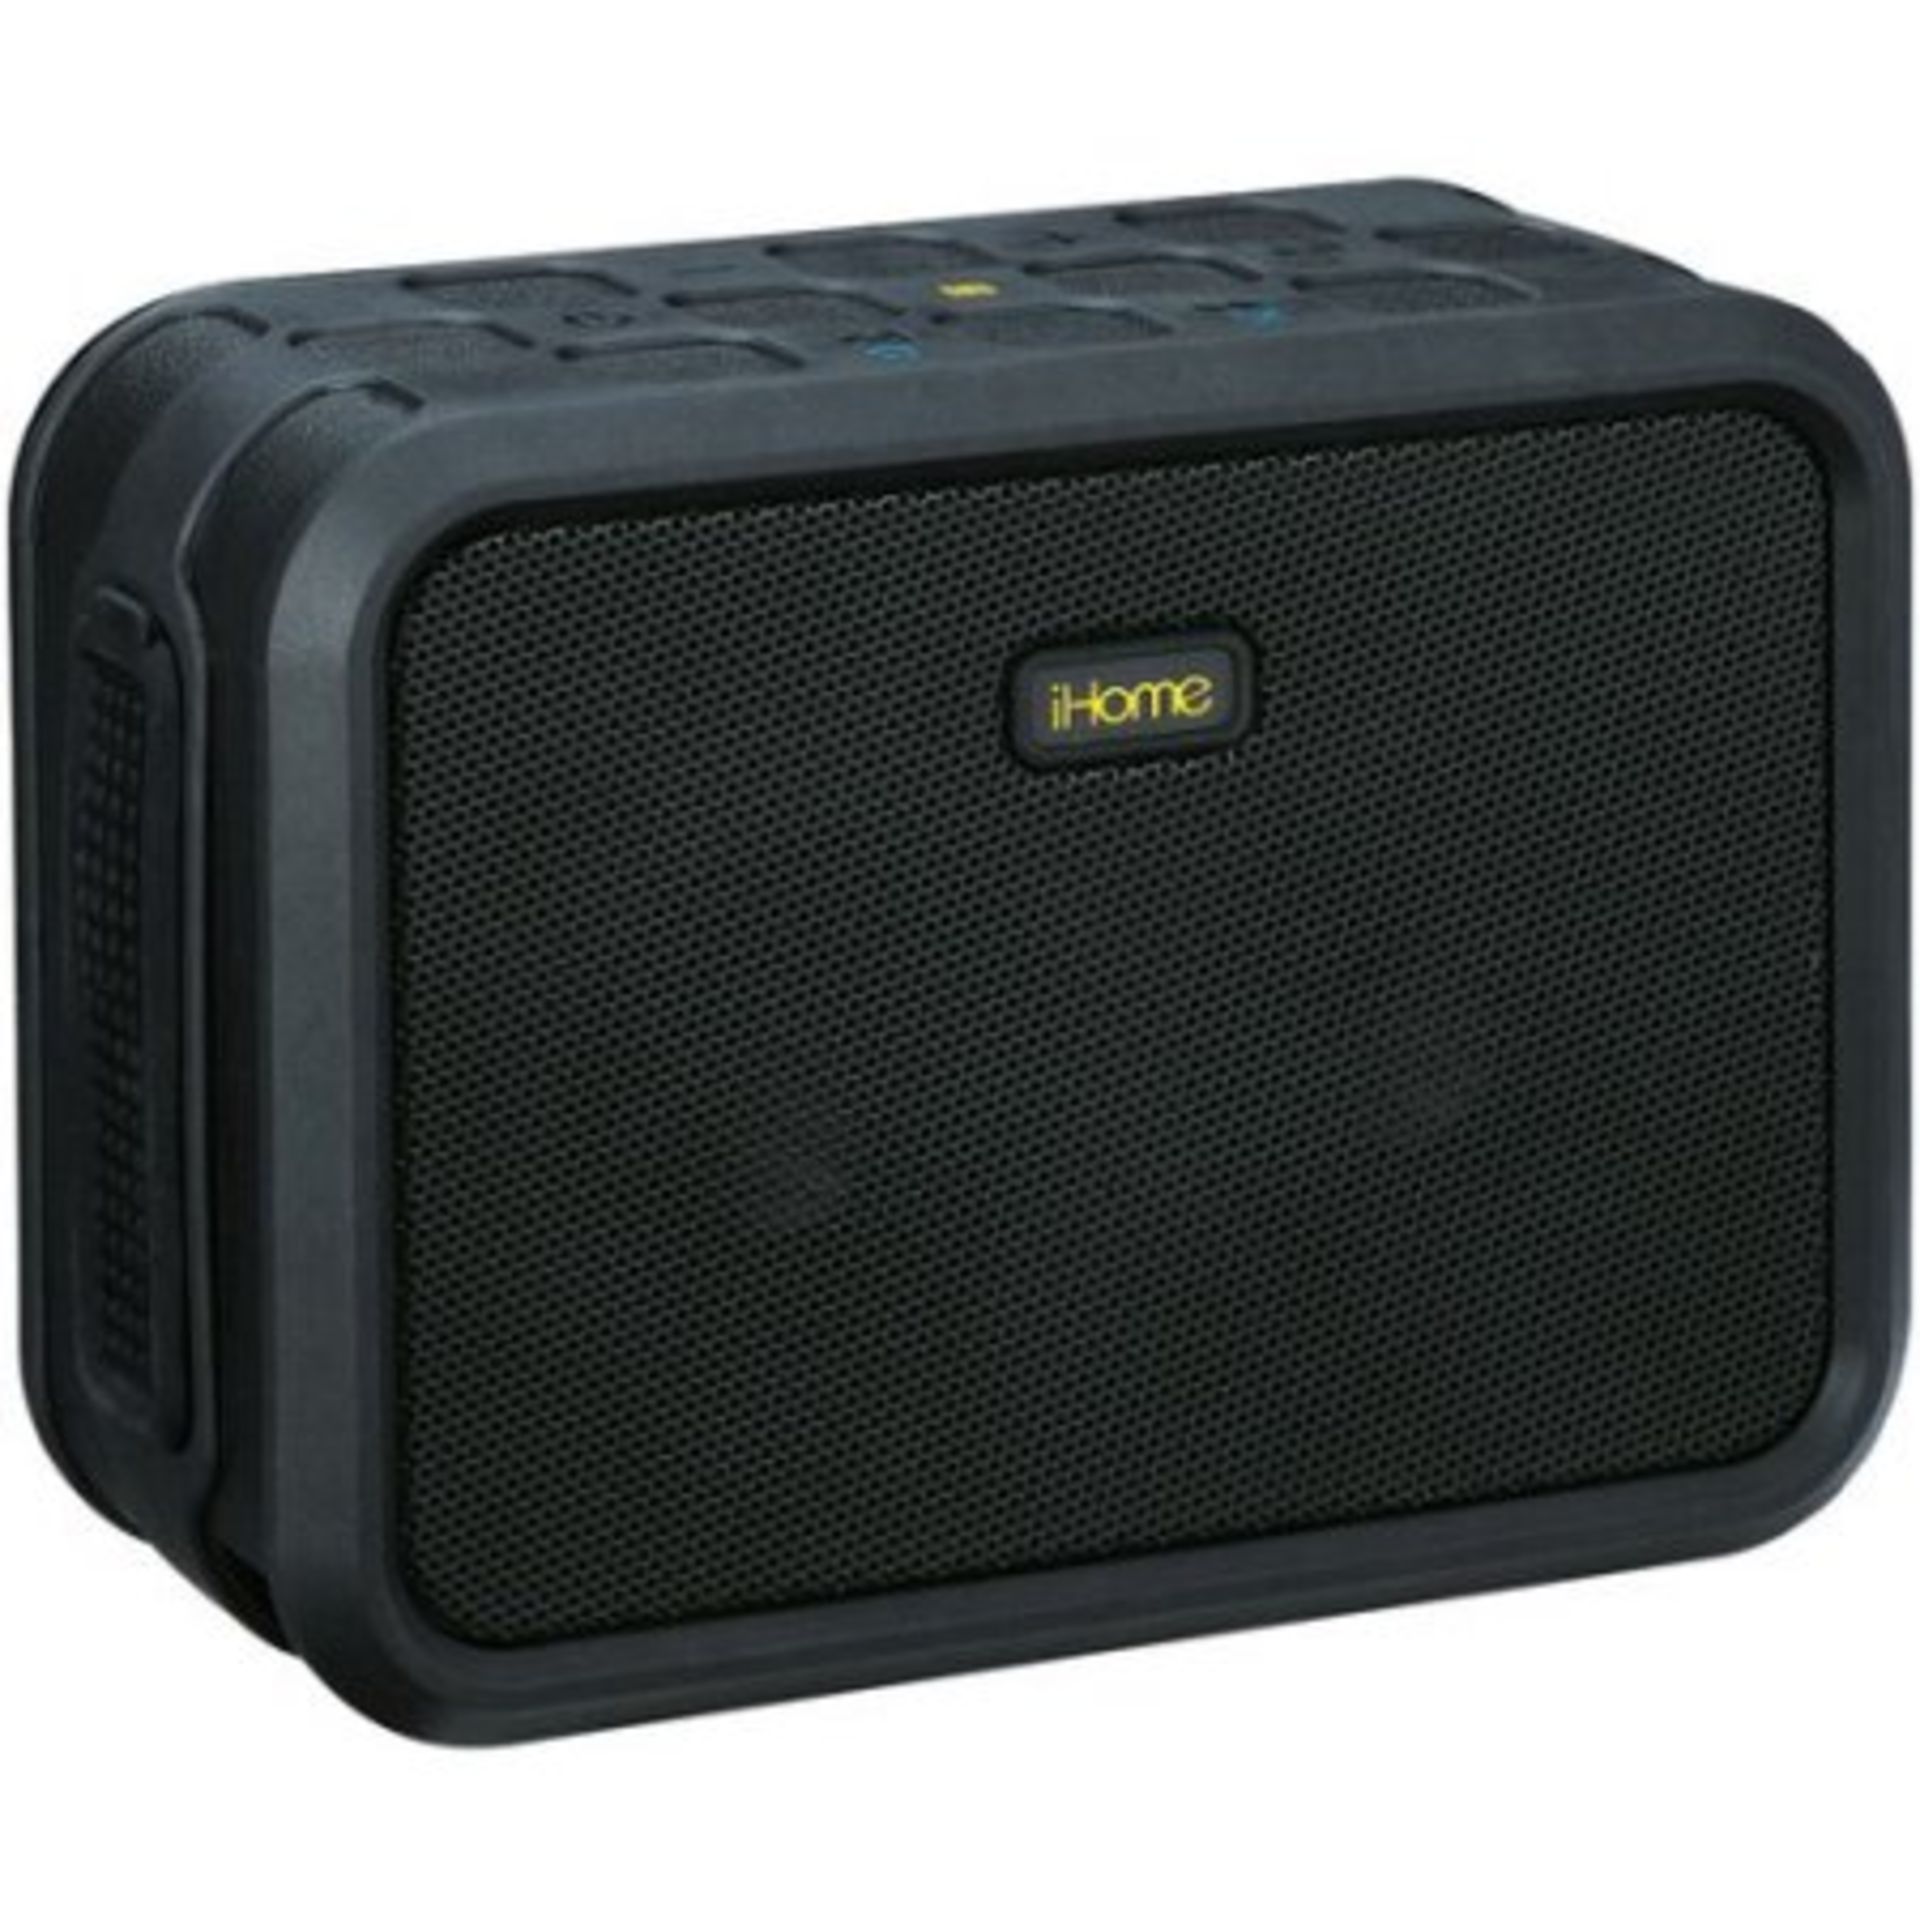 V *TRADE QTY* Brand New IHome Rugged Portable Waterproof Bluetooth Stereo Speaker-IPX7 Waterproof